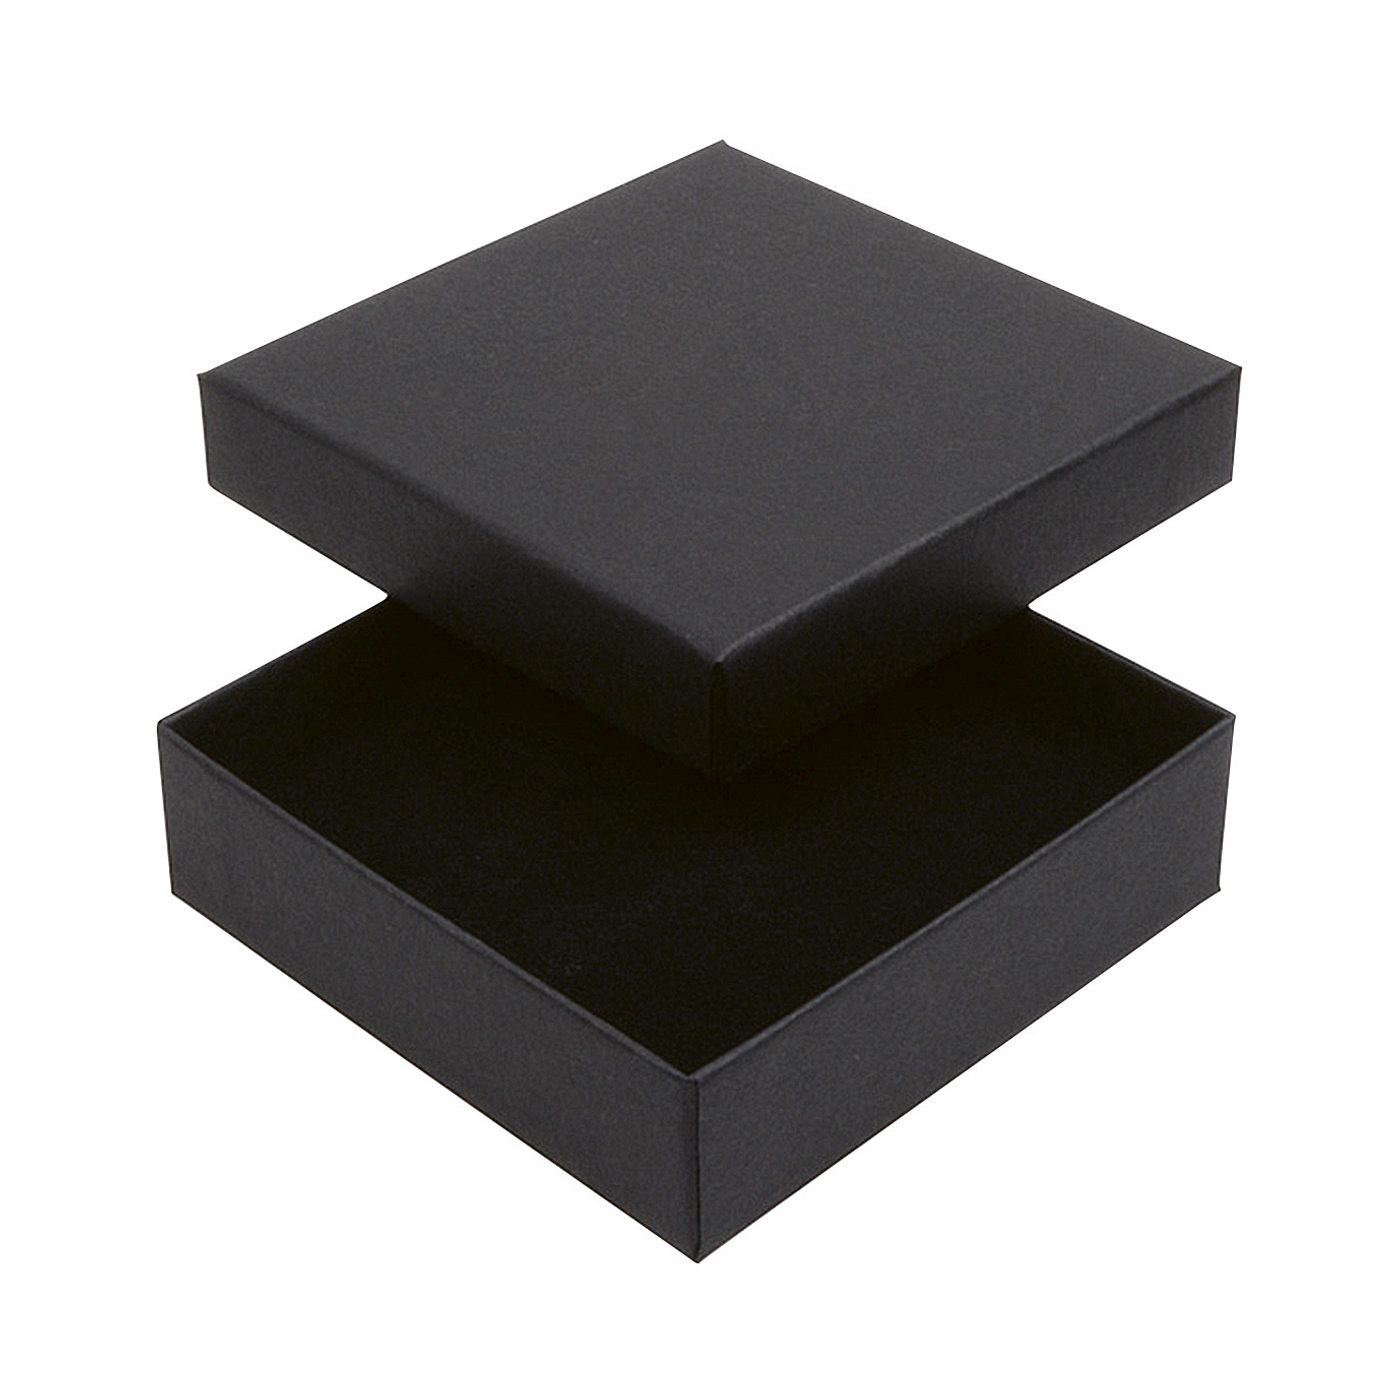 Jewellery Packaging "Eco", Black, 86 x 86 x 26 mm - 1 piece